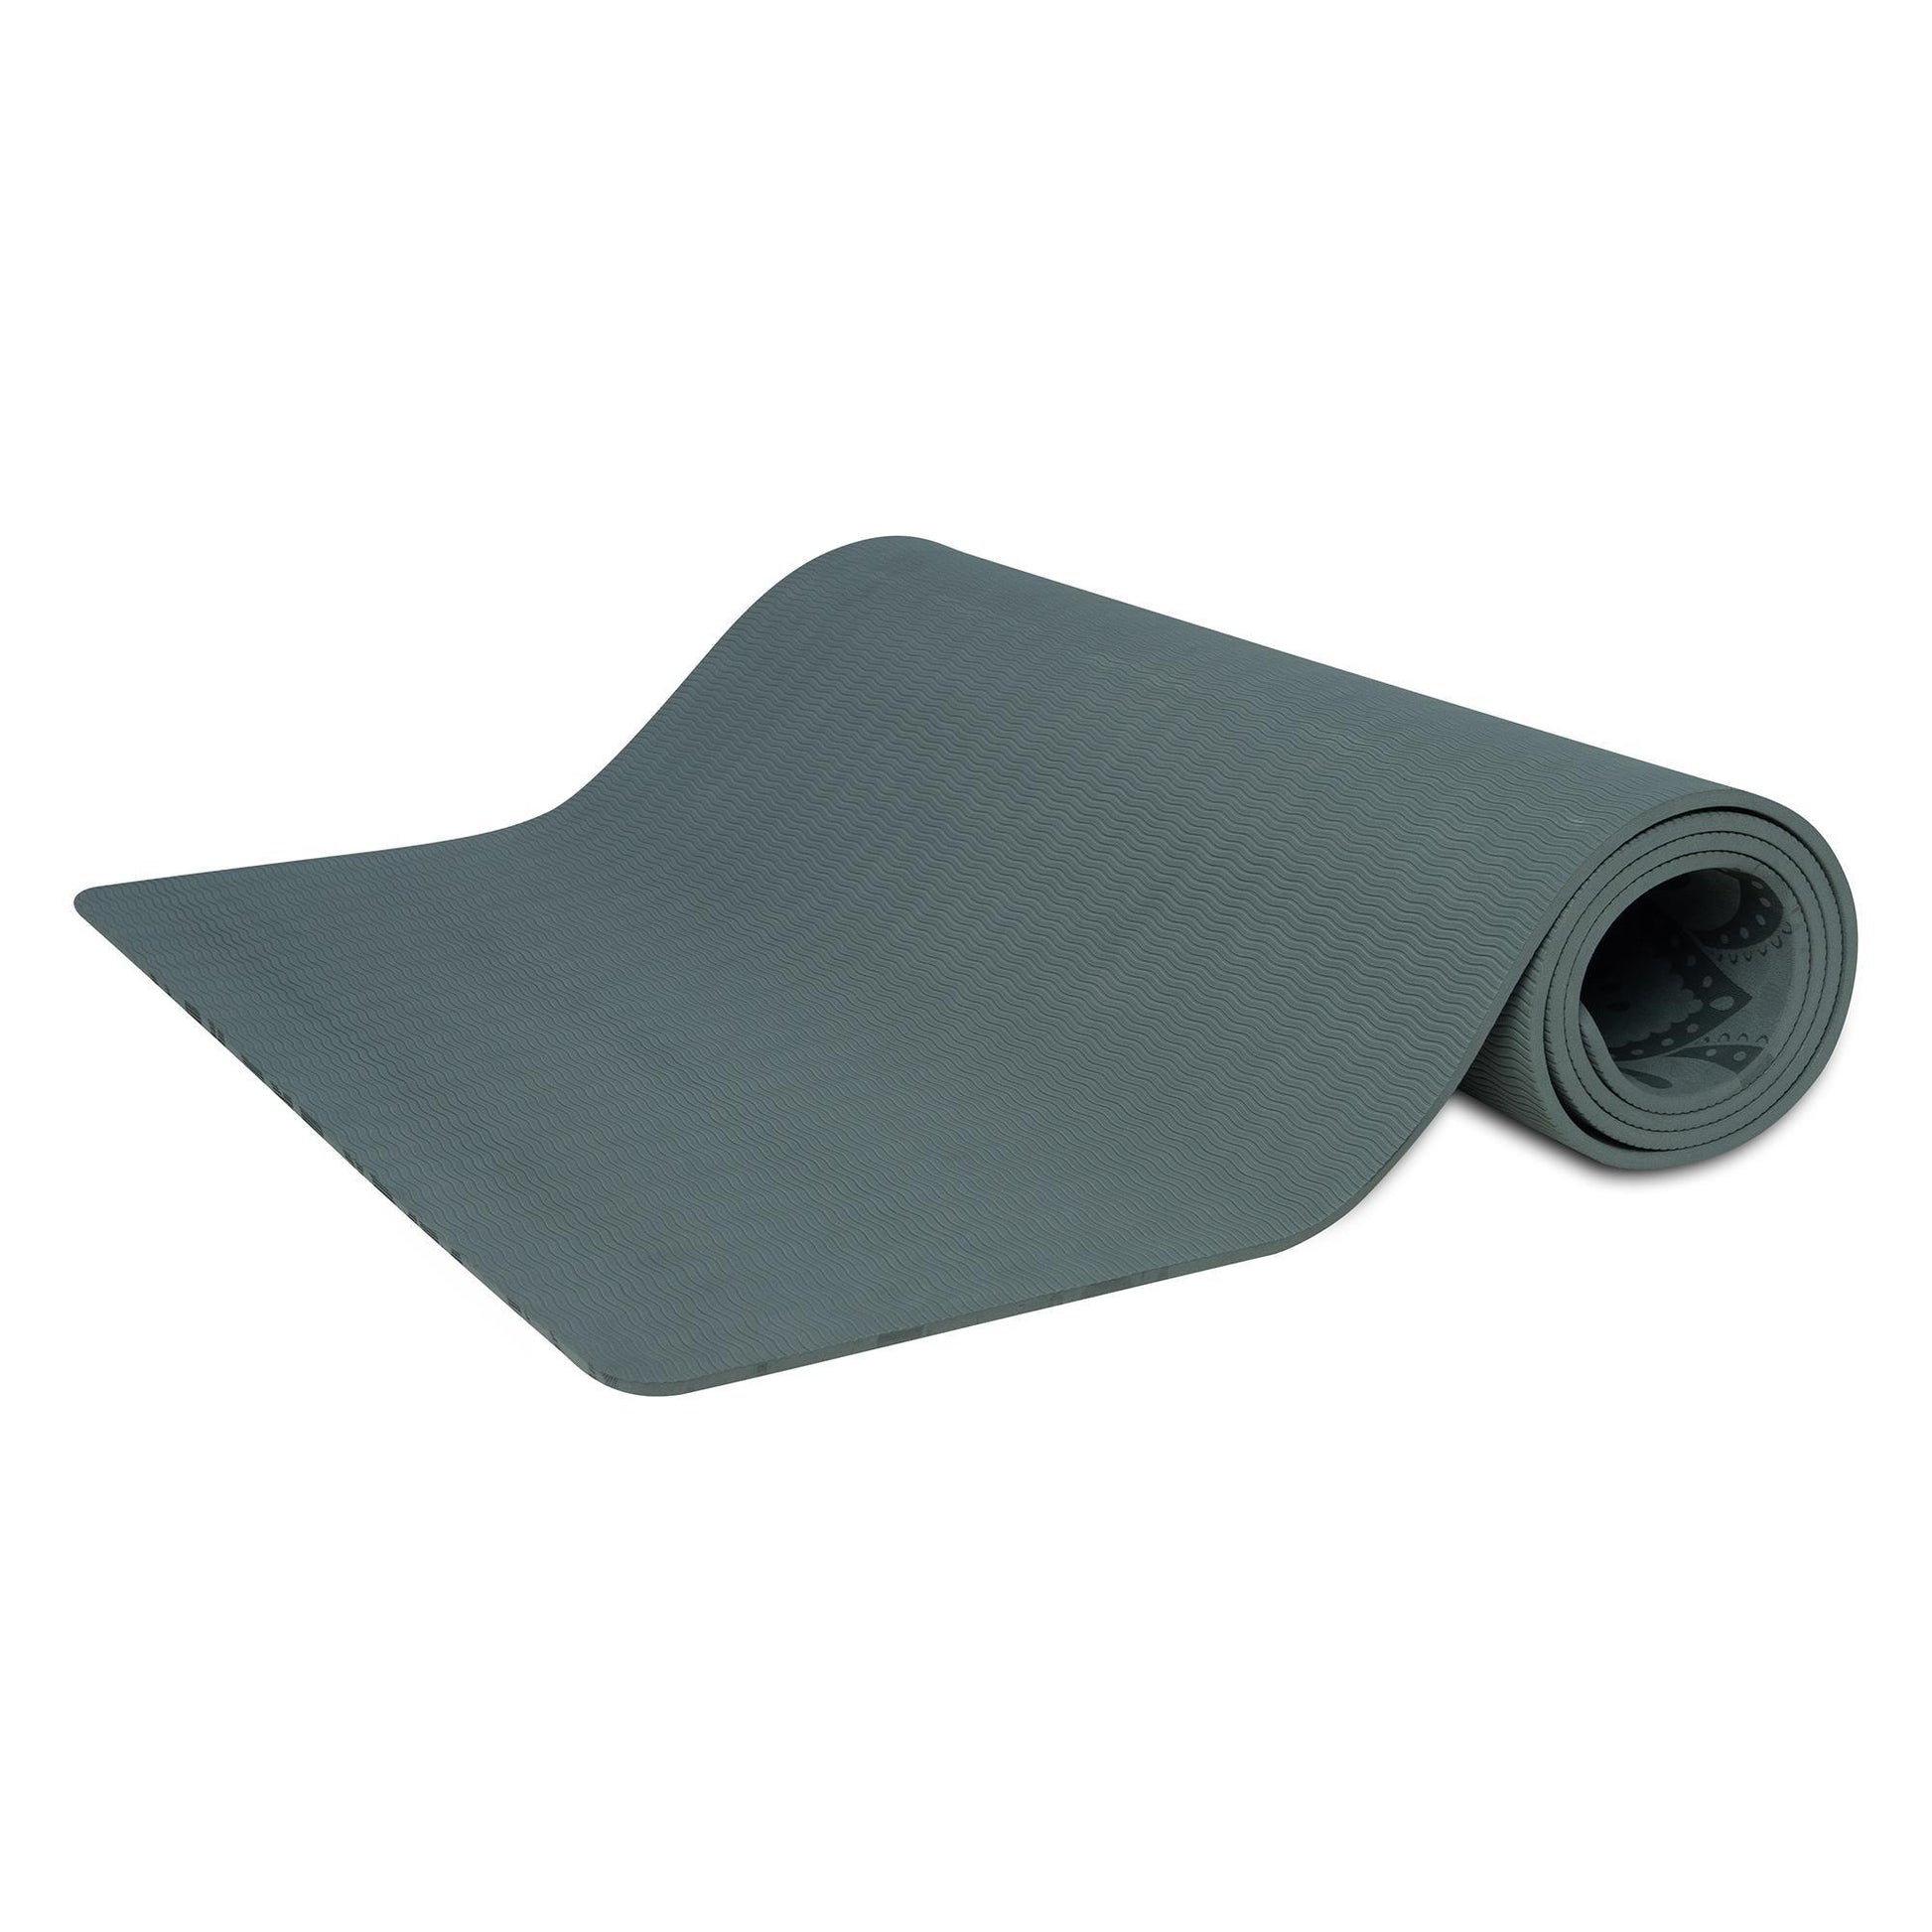 Flow Yoga Mat - Mandala Charcoal 6mm - Best Grey Mats for Beginners